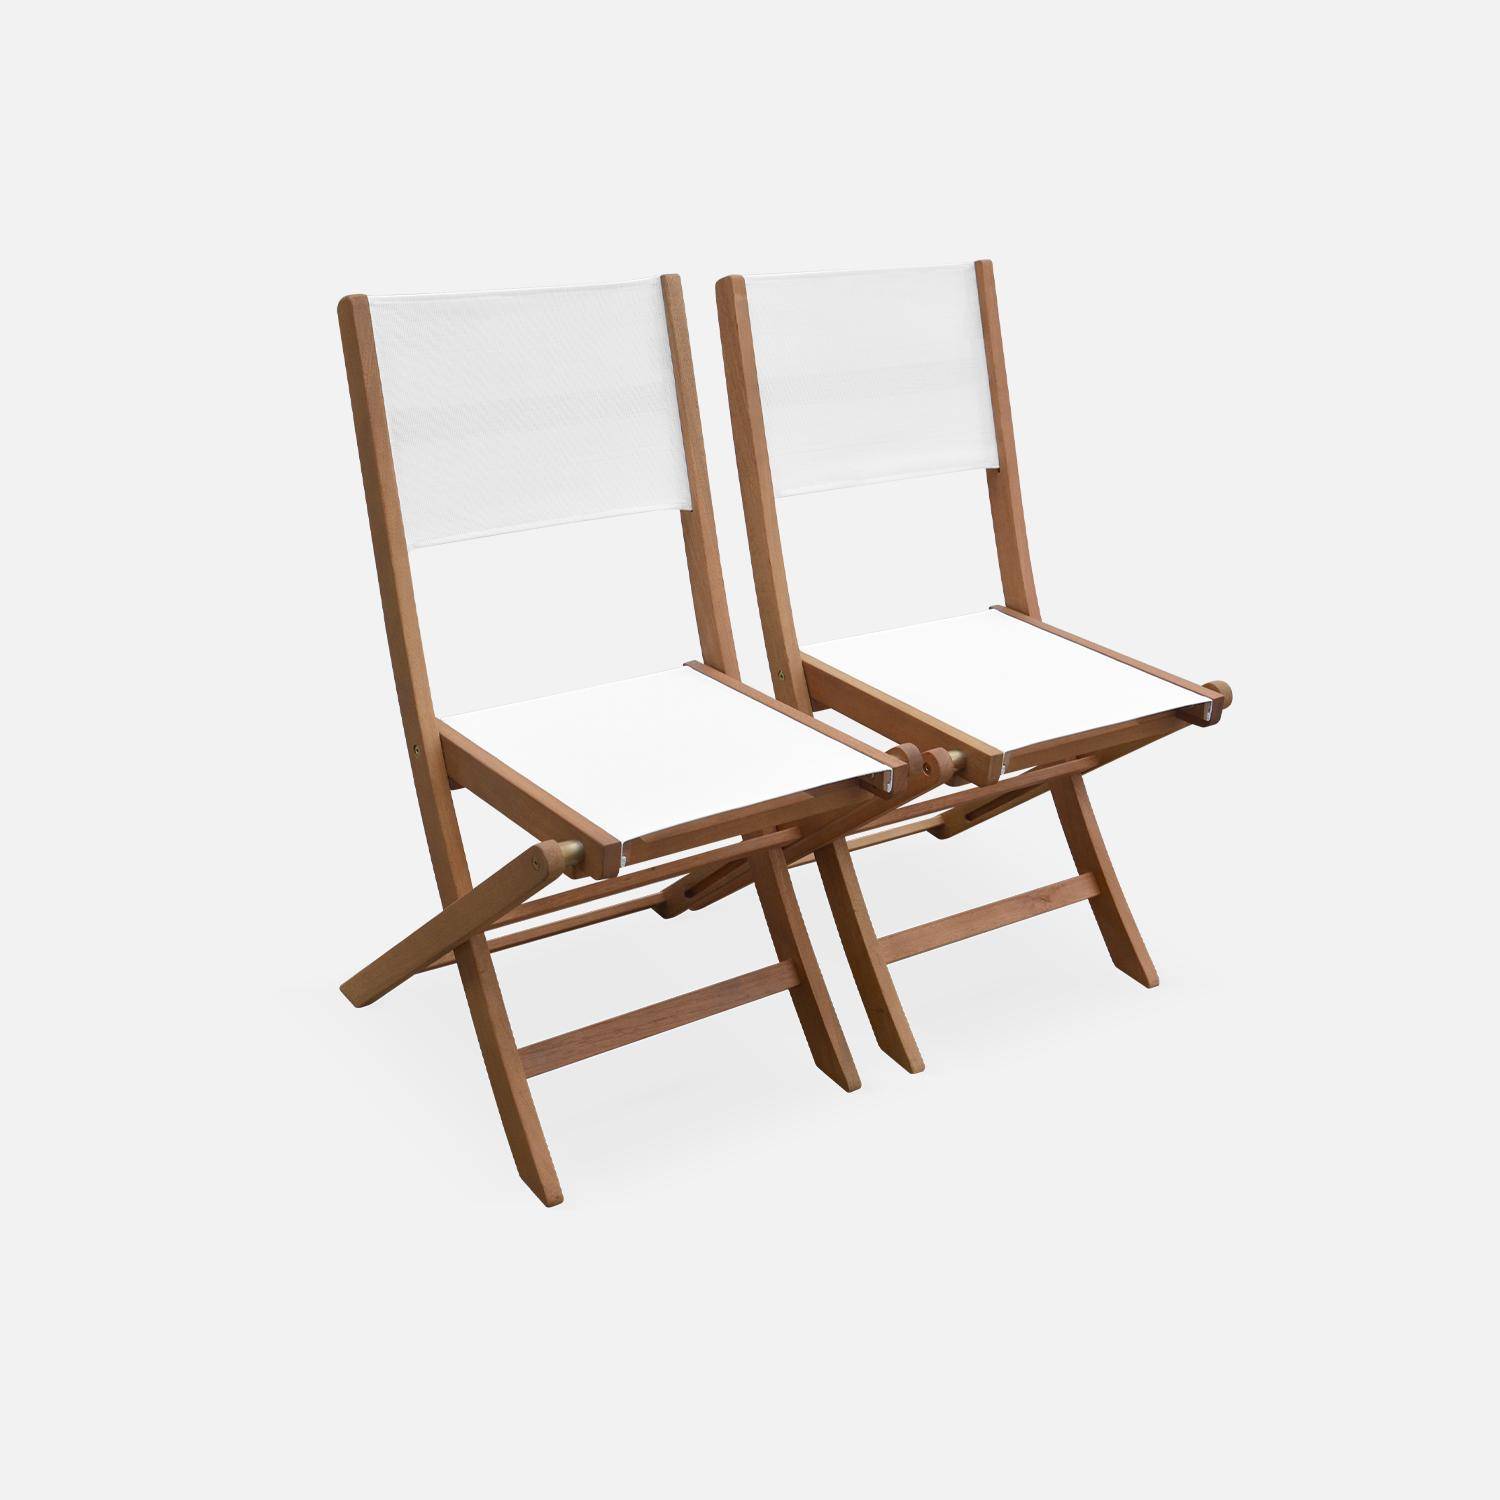 Conjunto de muebles de jardín de madera Almería, antracita, mesa rectangular 120-180cm, 6 sillas de eucalipto FSC y textilene,sweeek,Photo2